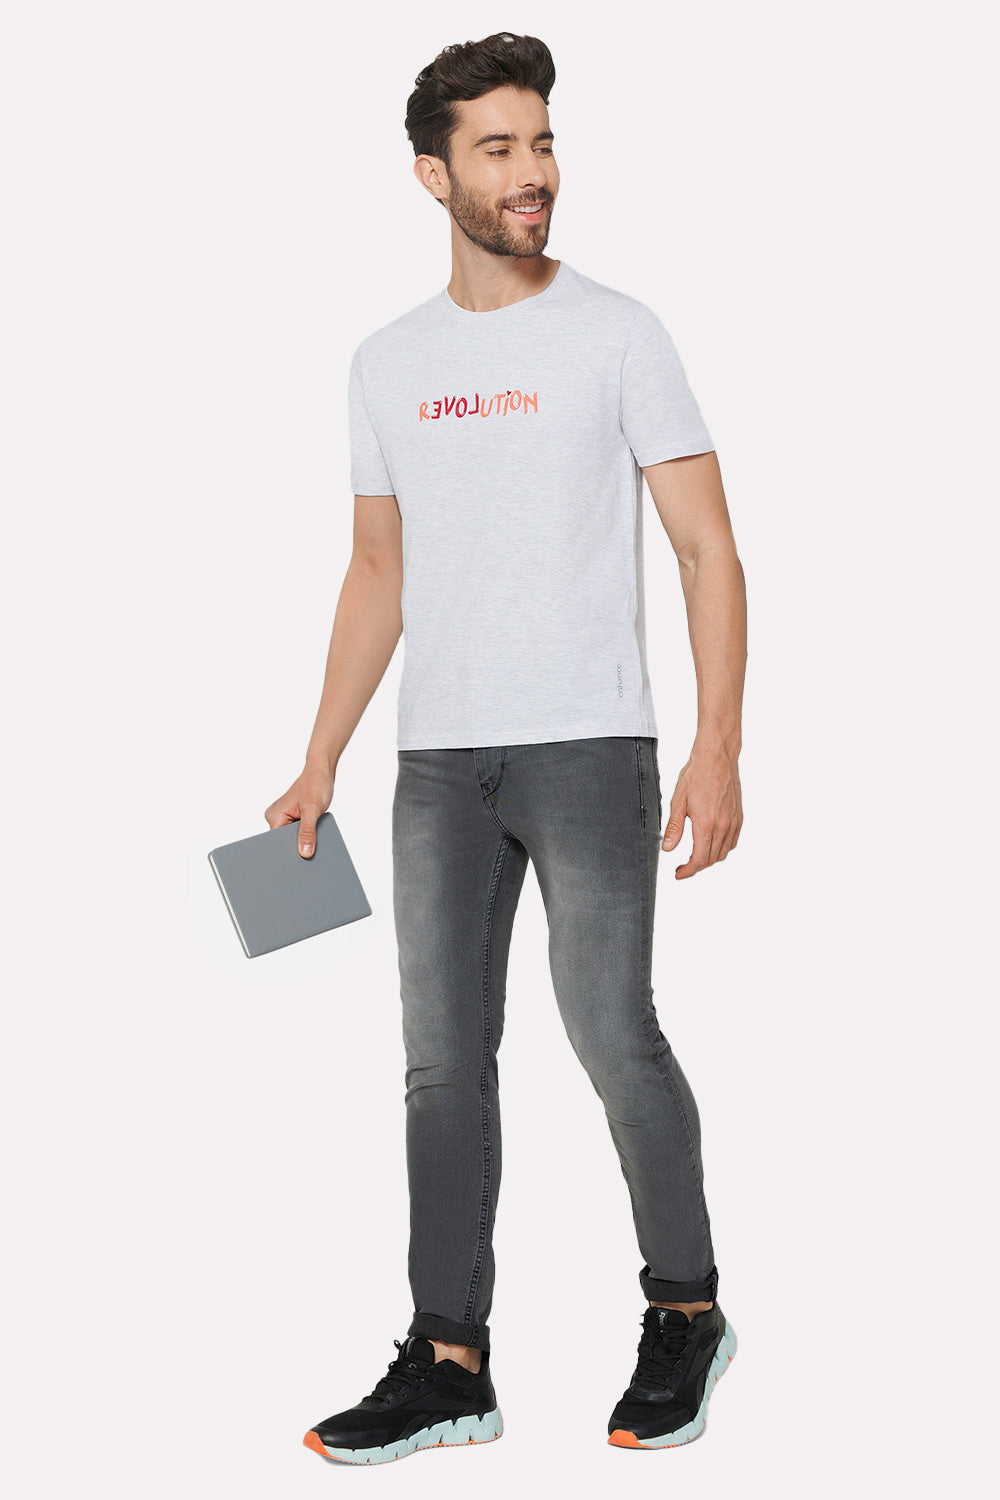 Enhance Men's Printed Crew Neck Casual T-Shirt - Grey - TS32